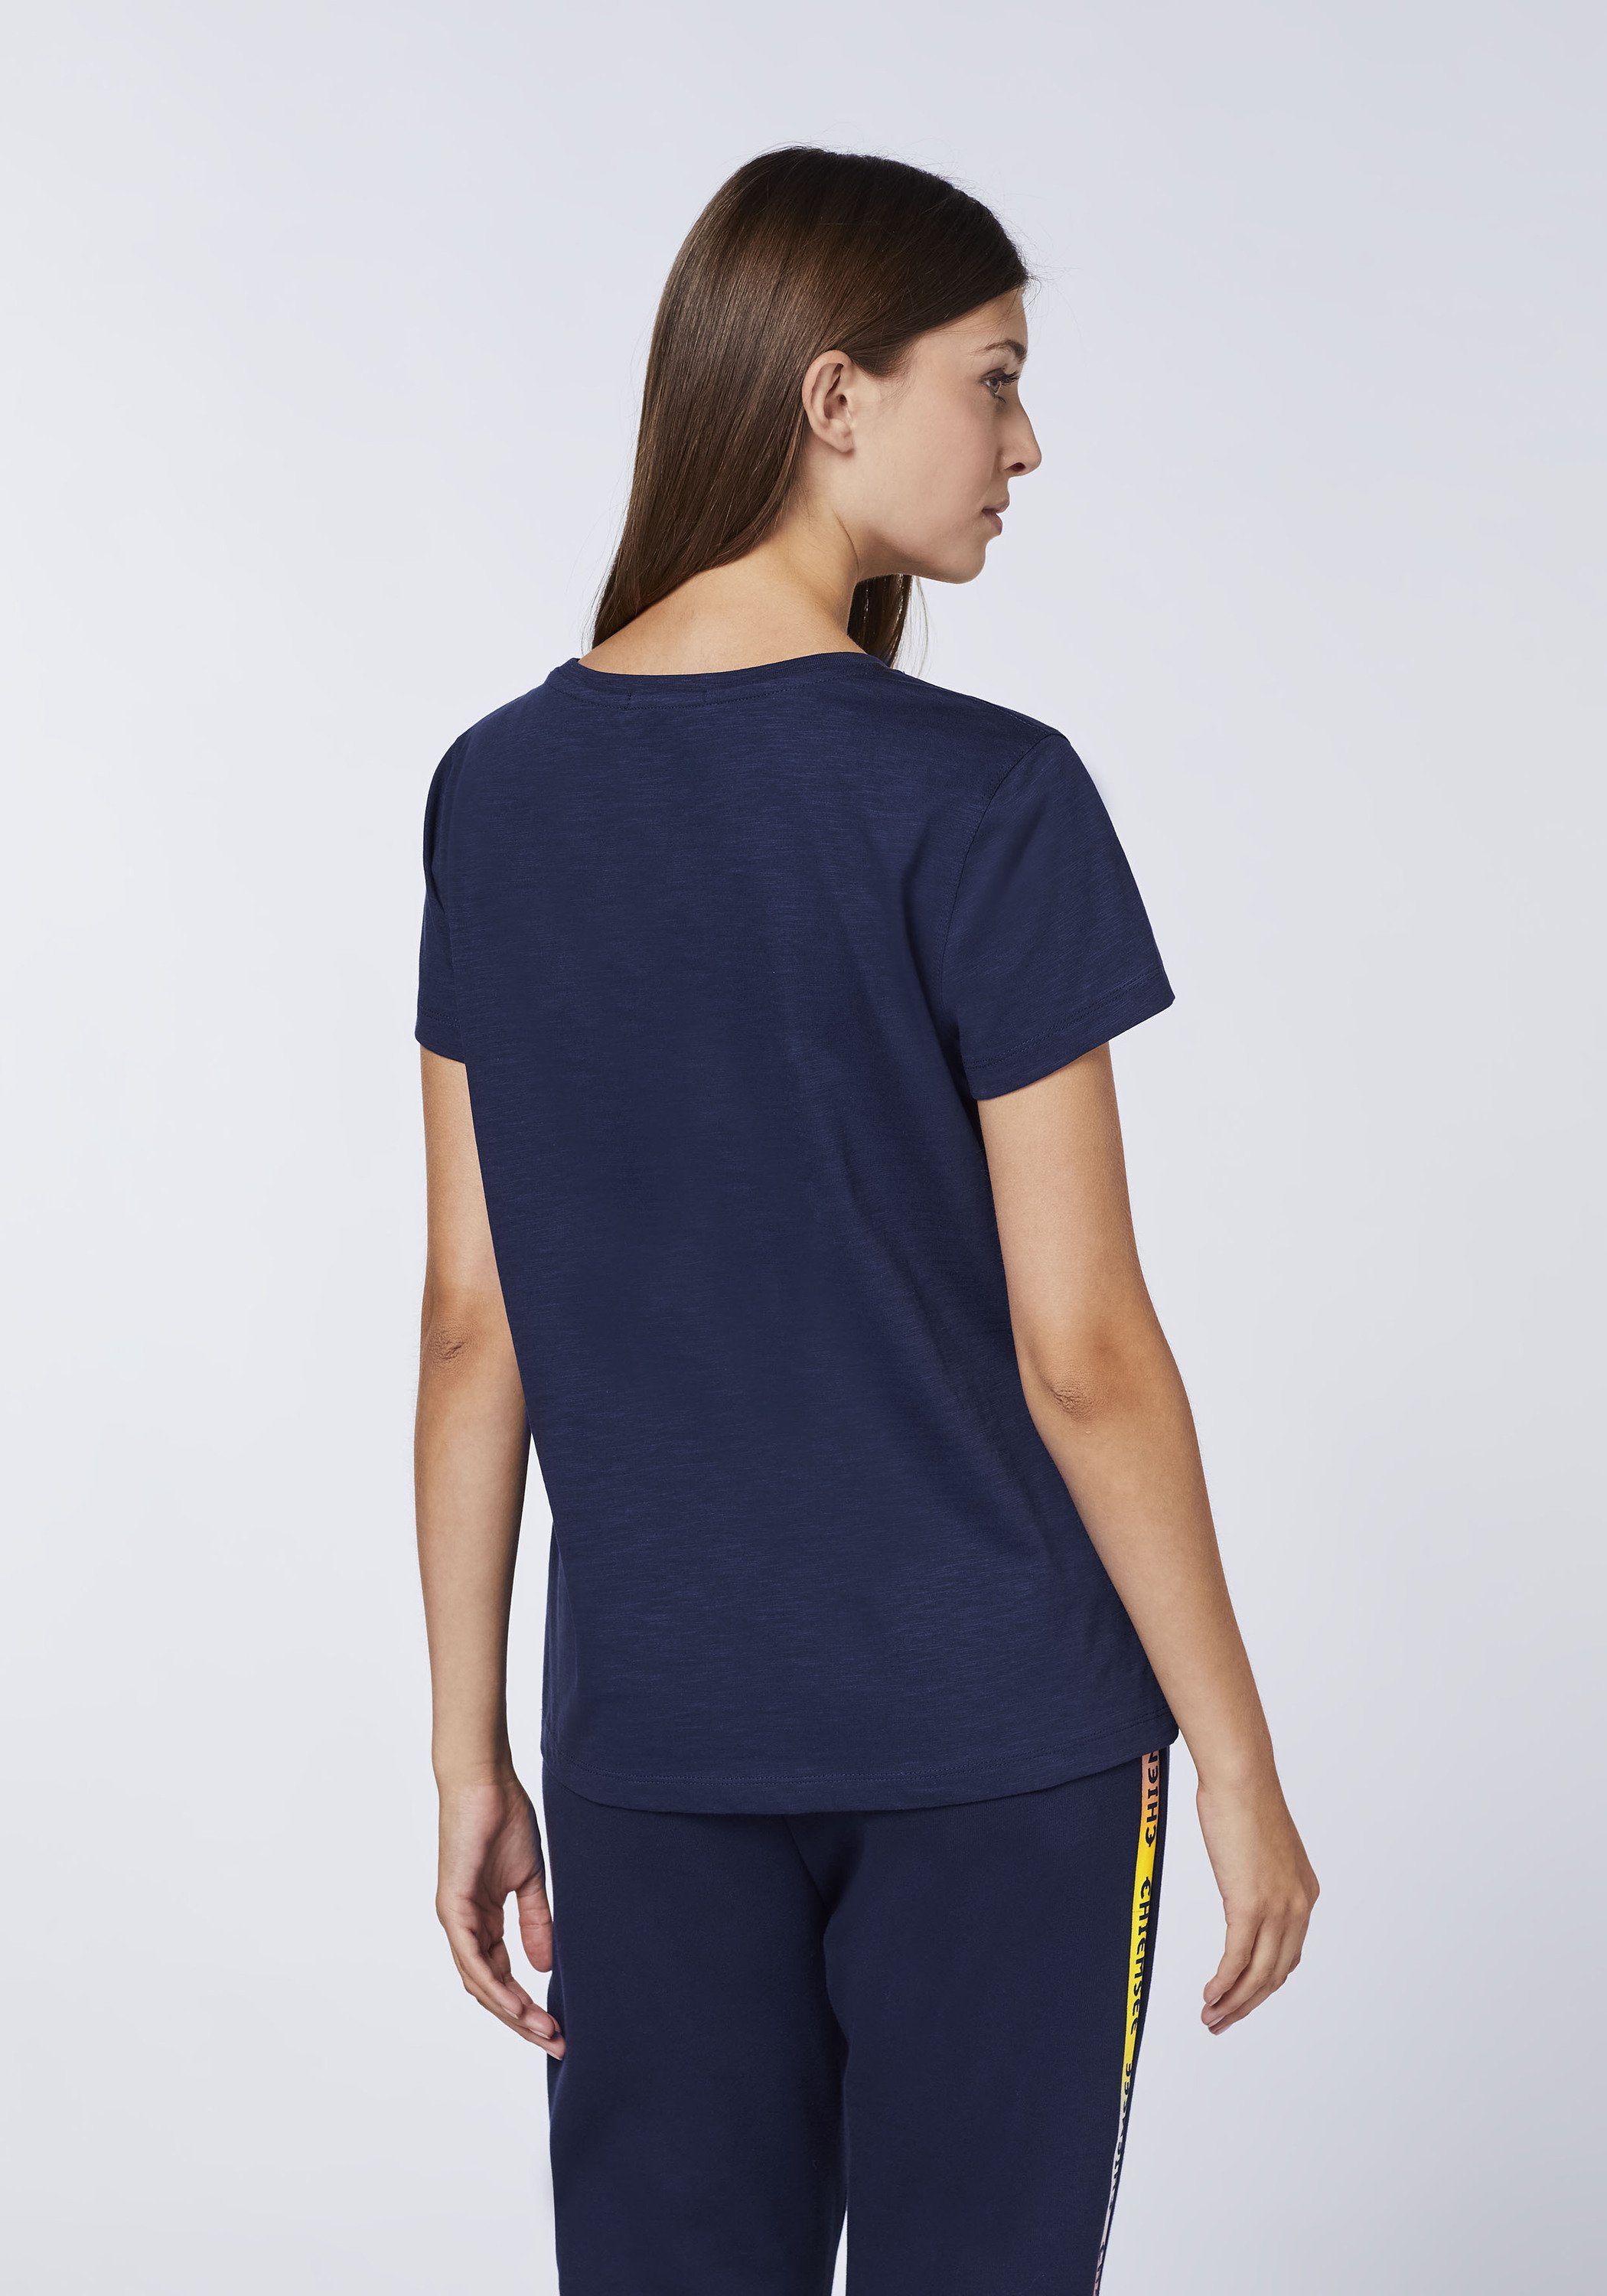 Chiemsee Print-Shirt T-Shirt mit Jumper-Frontprint Blue Medieval 19-3933 1